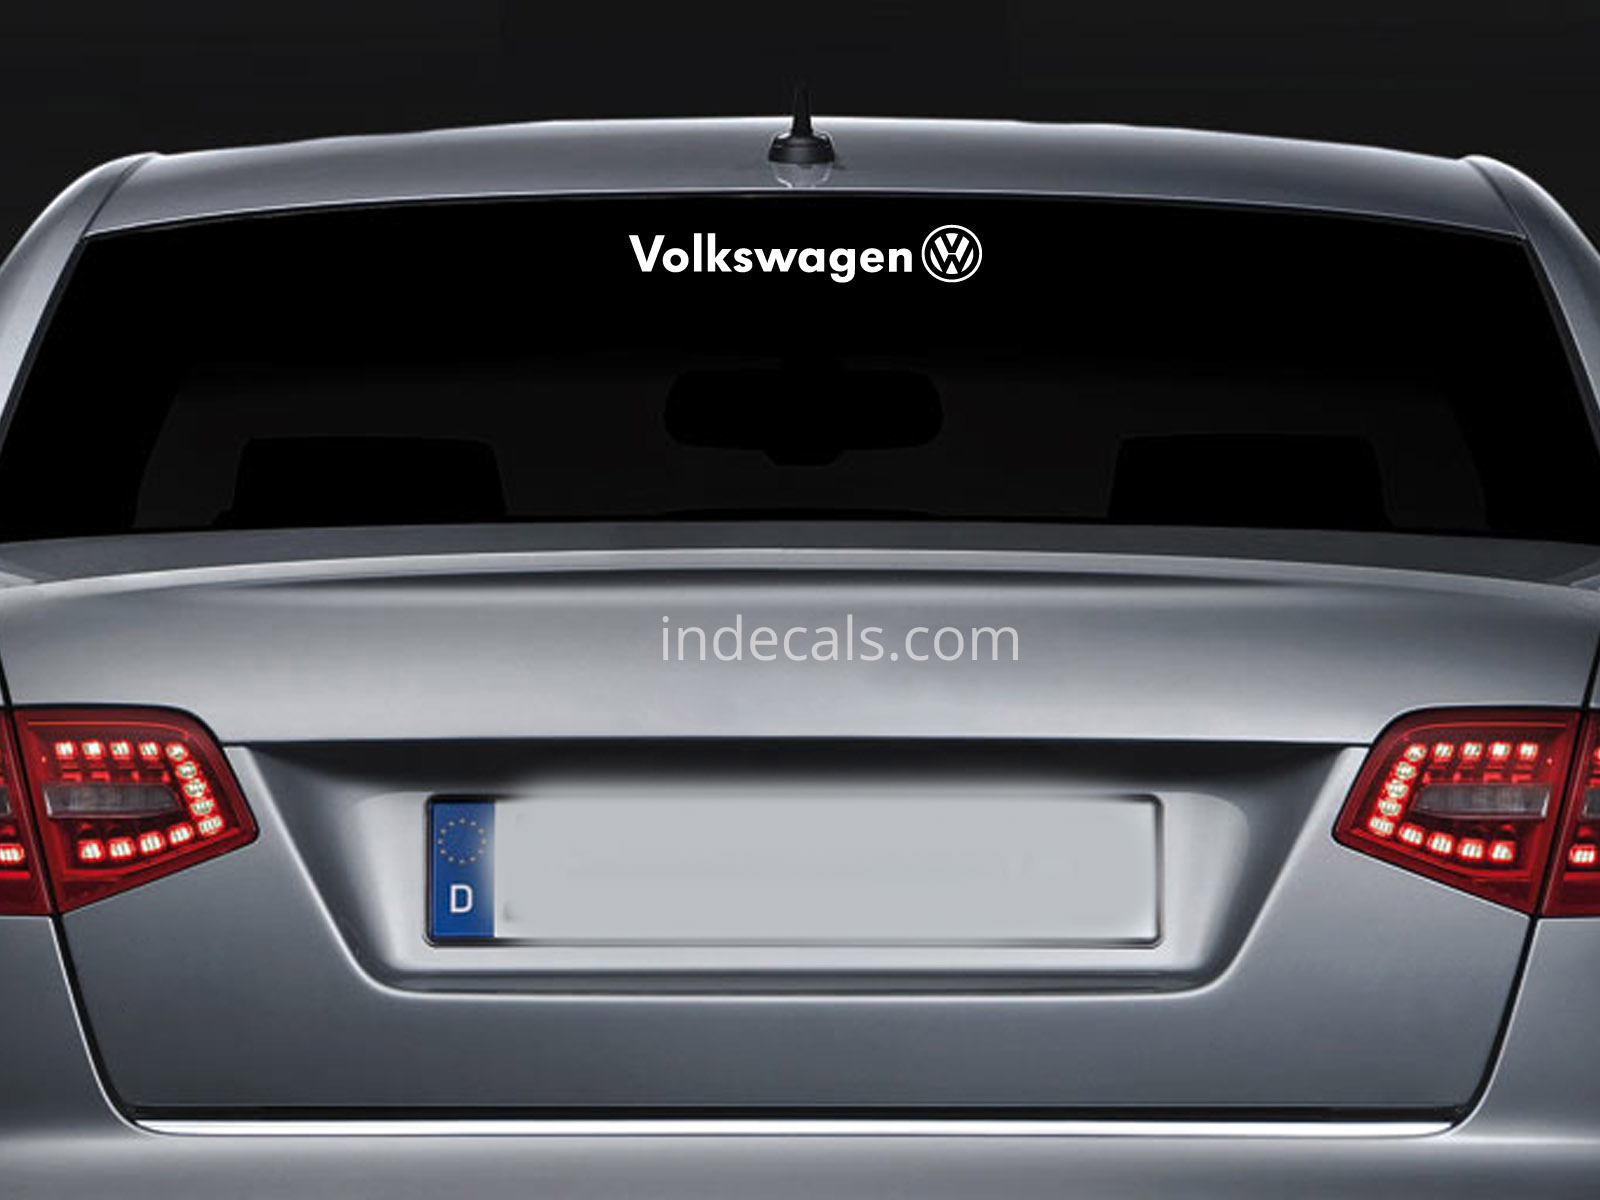 1 x Volkswagen Sticker for Windshield or Back Window - White